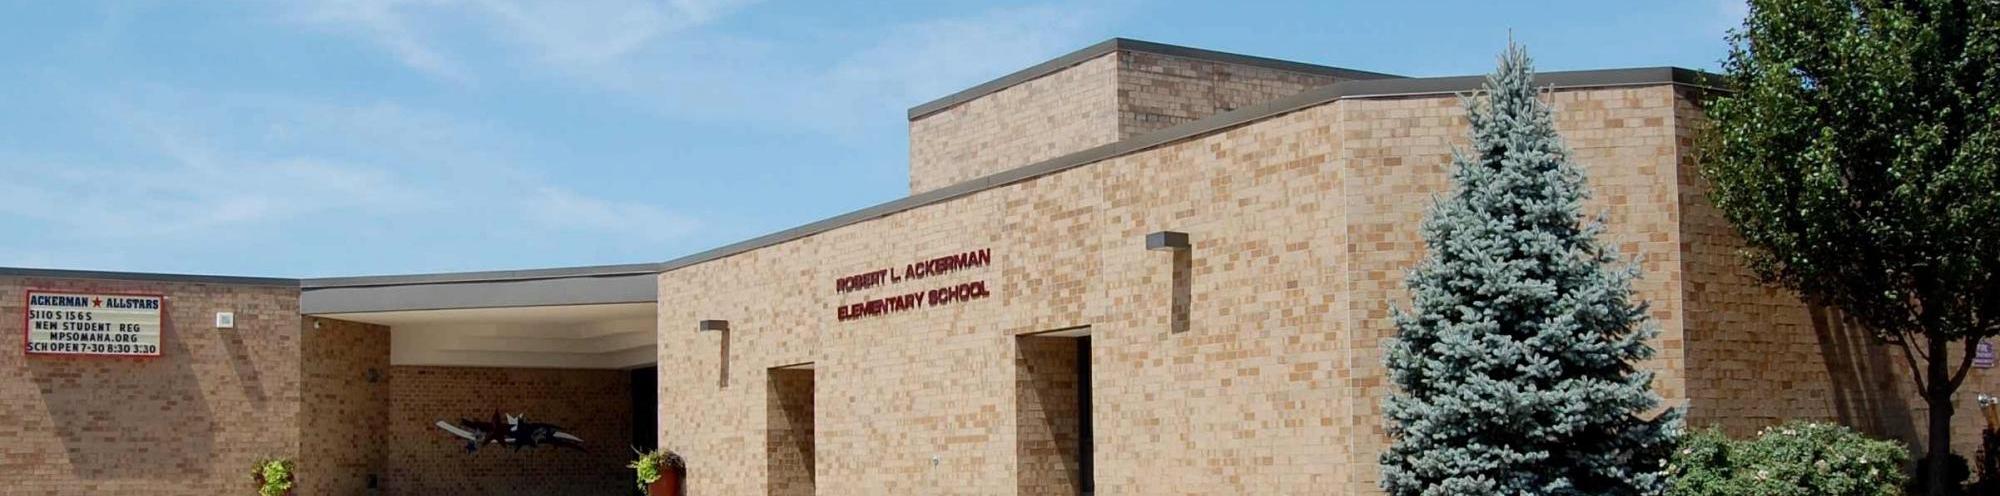 photo of Ackerman Elementary